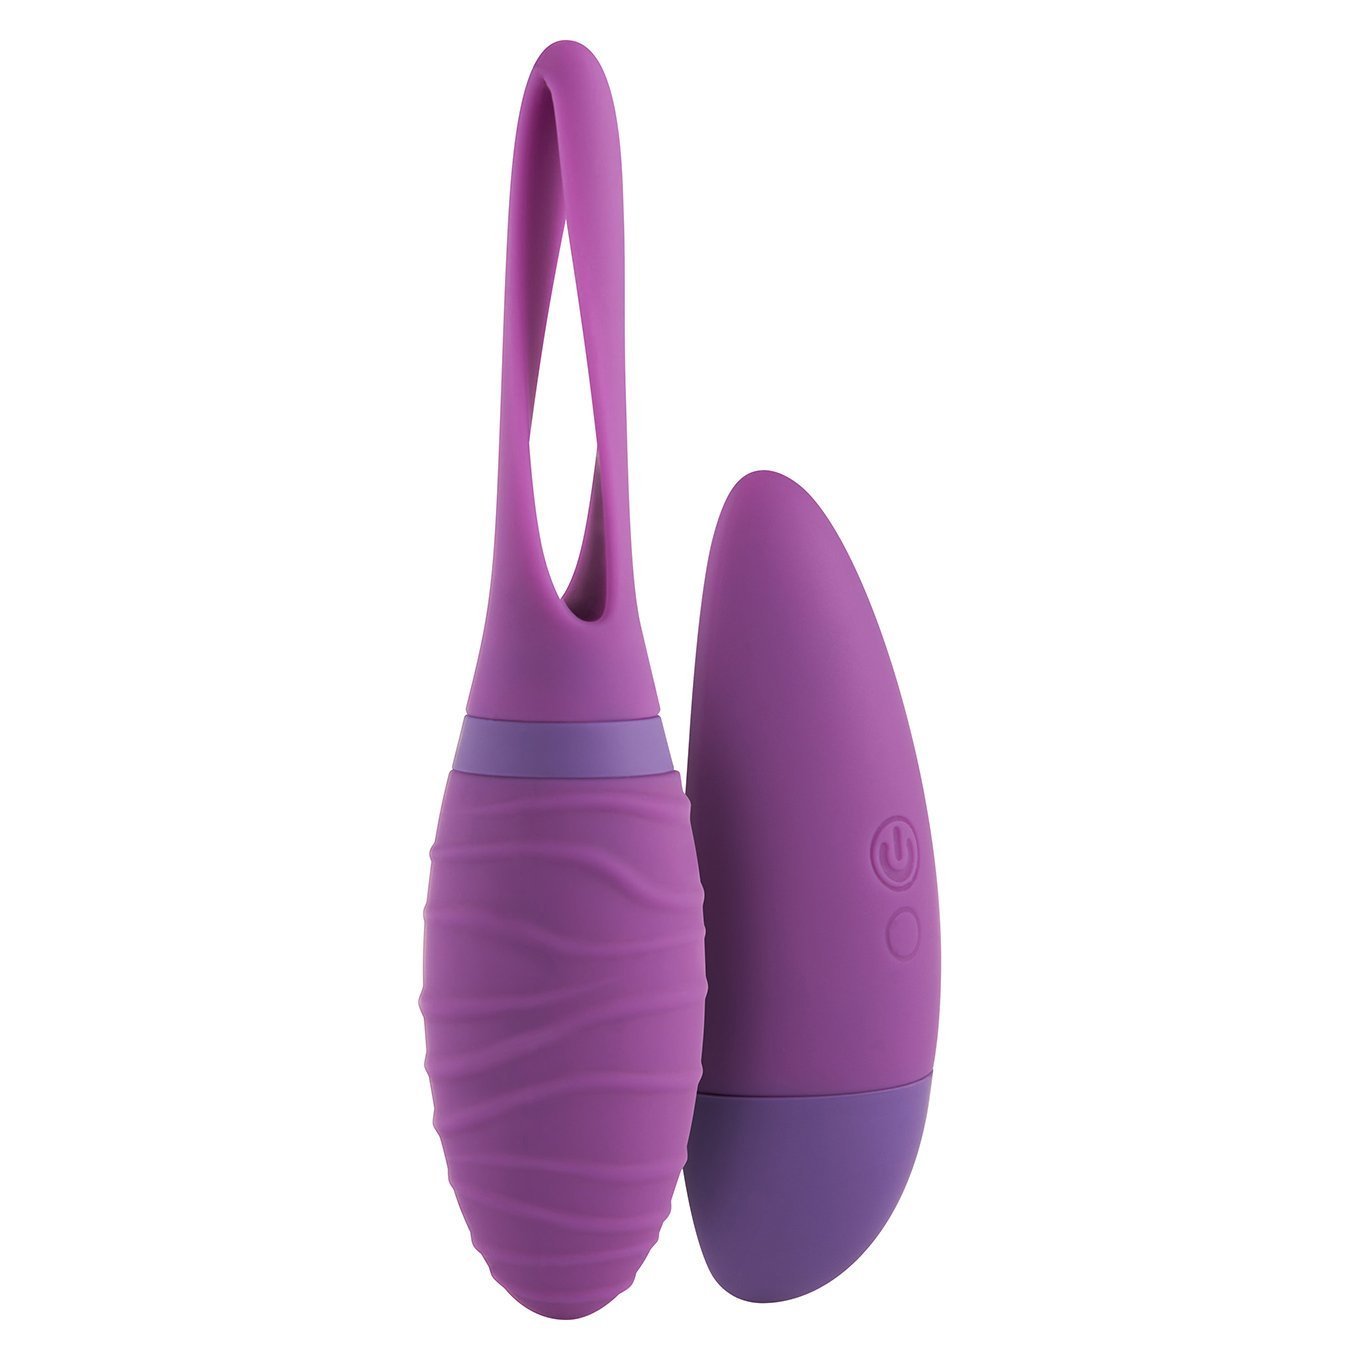 ToyJoy - Helix Remote Control Egg Vibrator (Purple) -  Wireless Remote Control Egg (Vibration) Non Rechargeable  Durio.sg